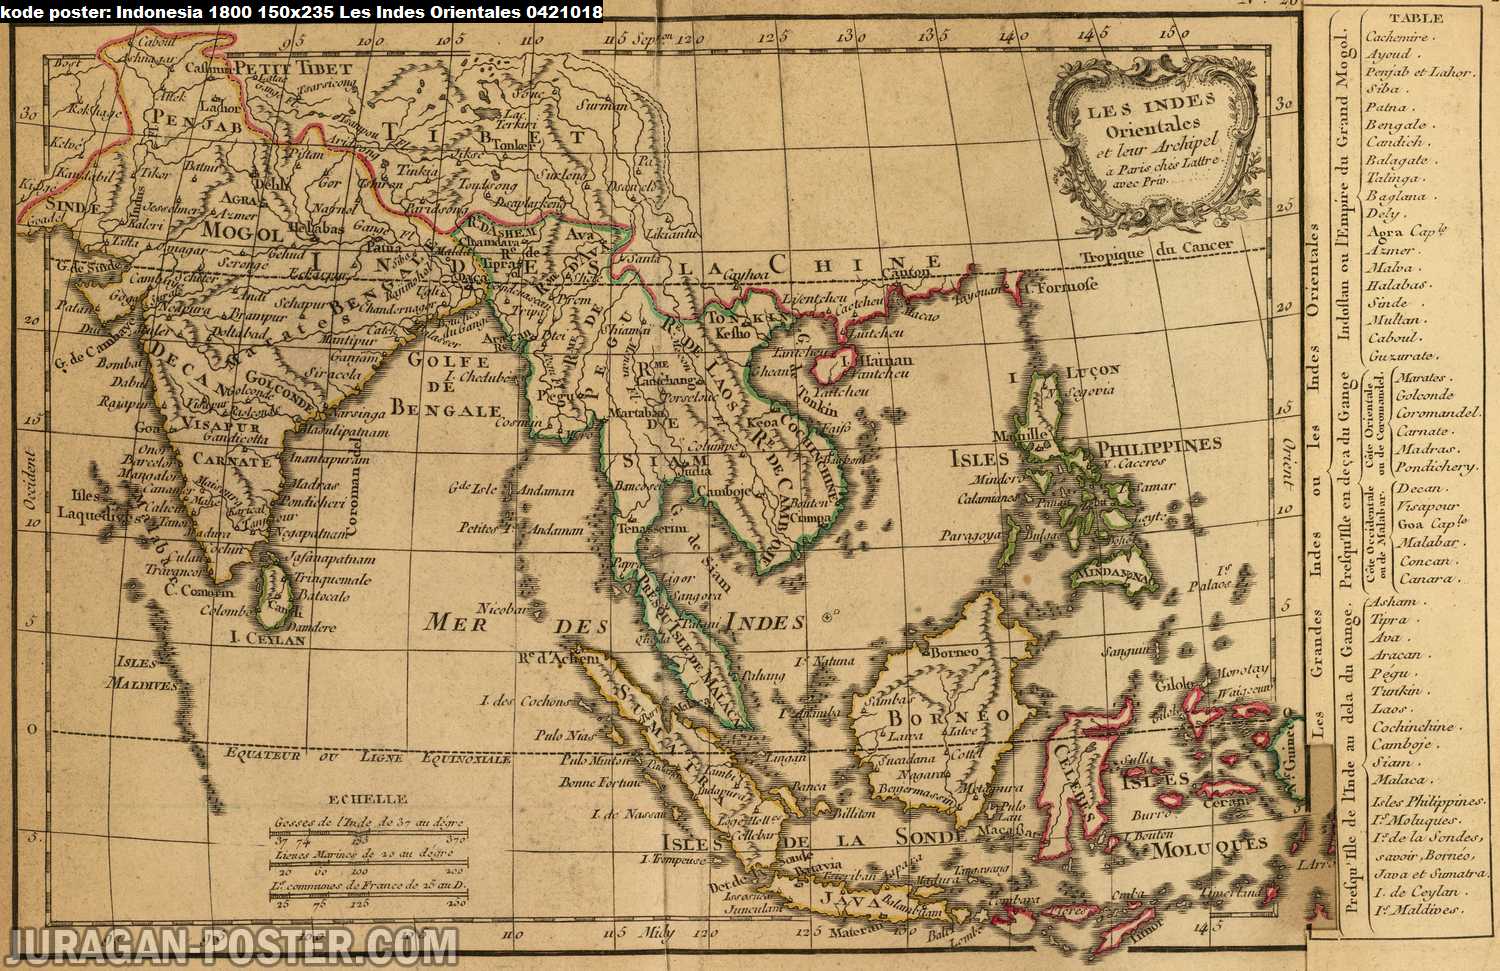 peta indonesia kuno tahun 1800